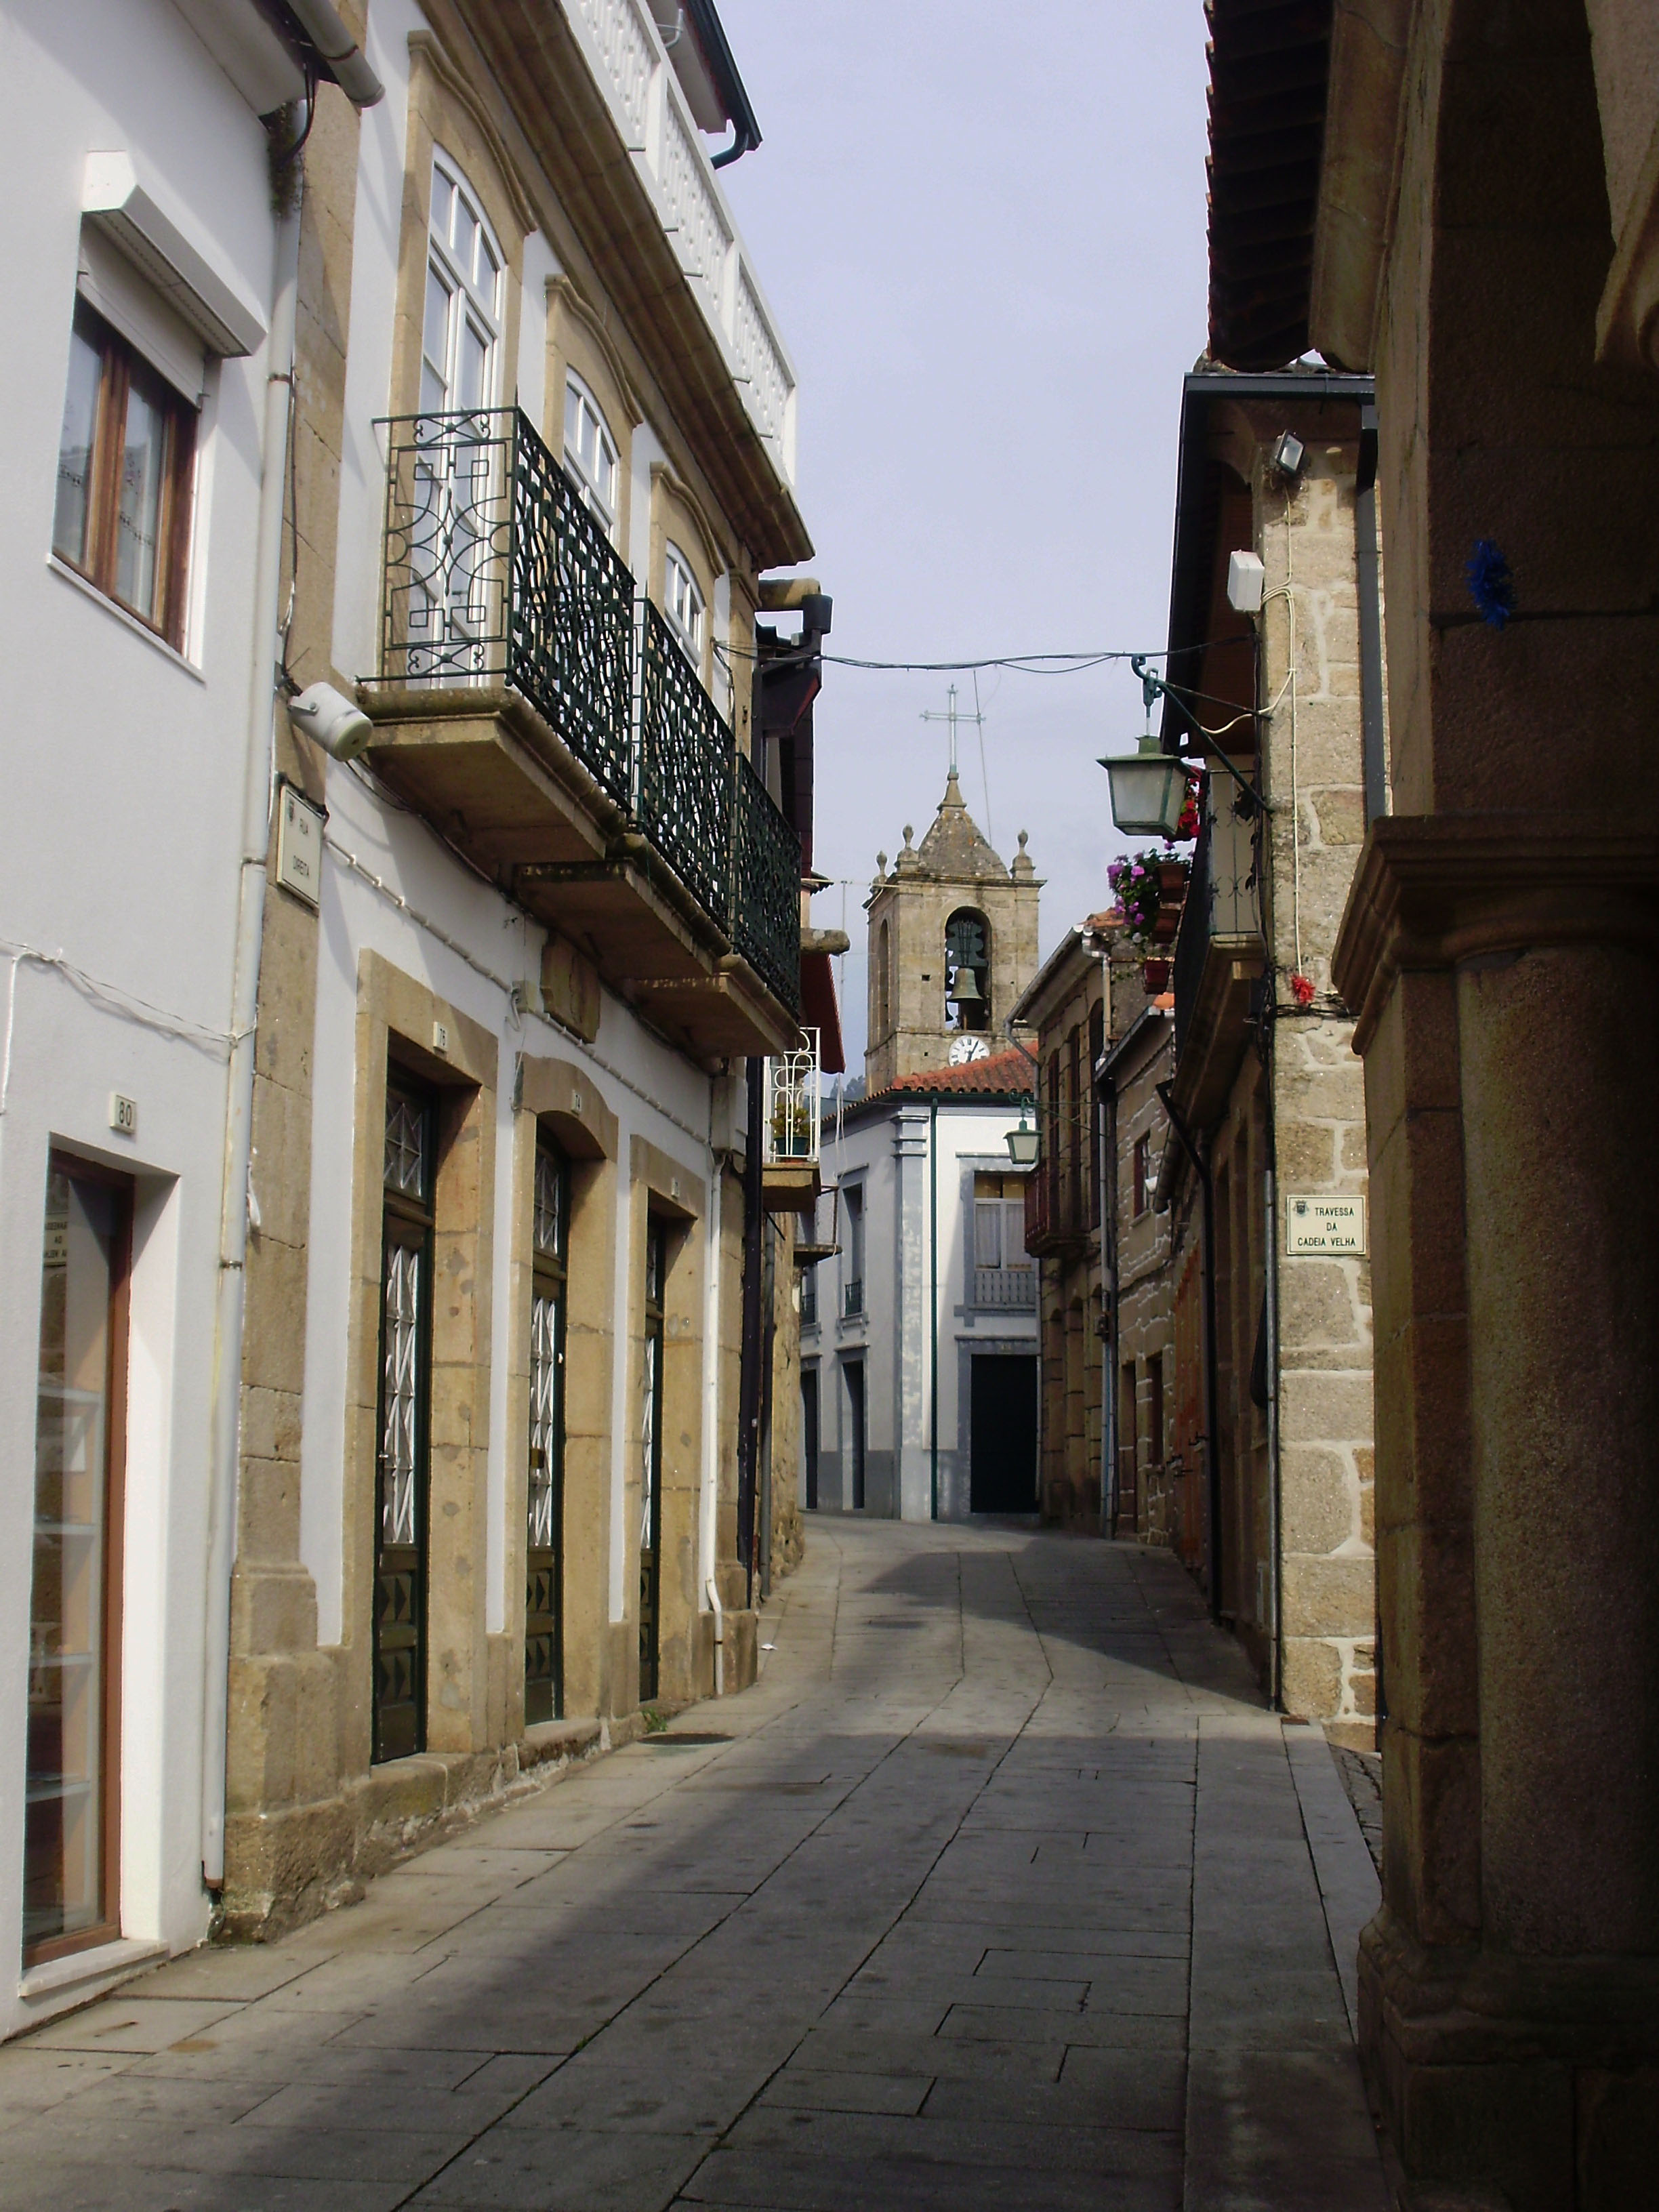 Foto de Melgaco, Portugal